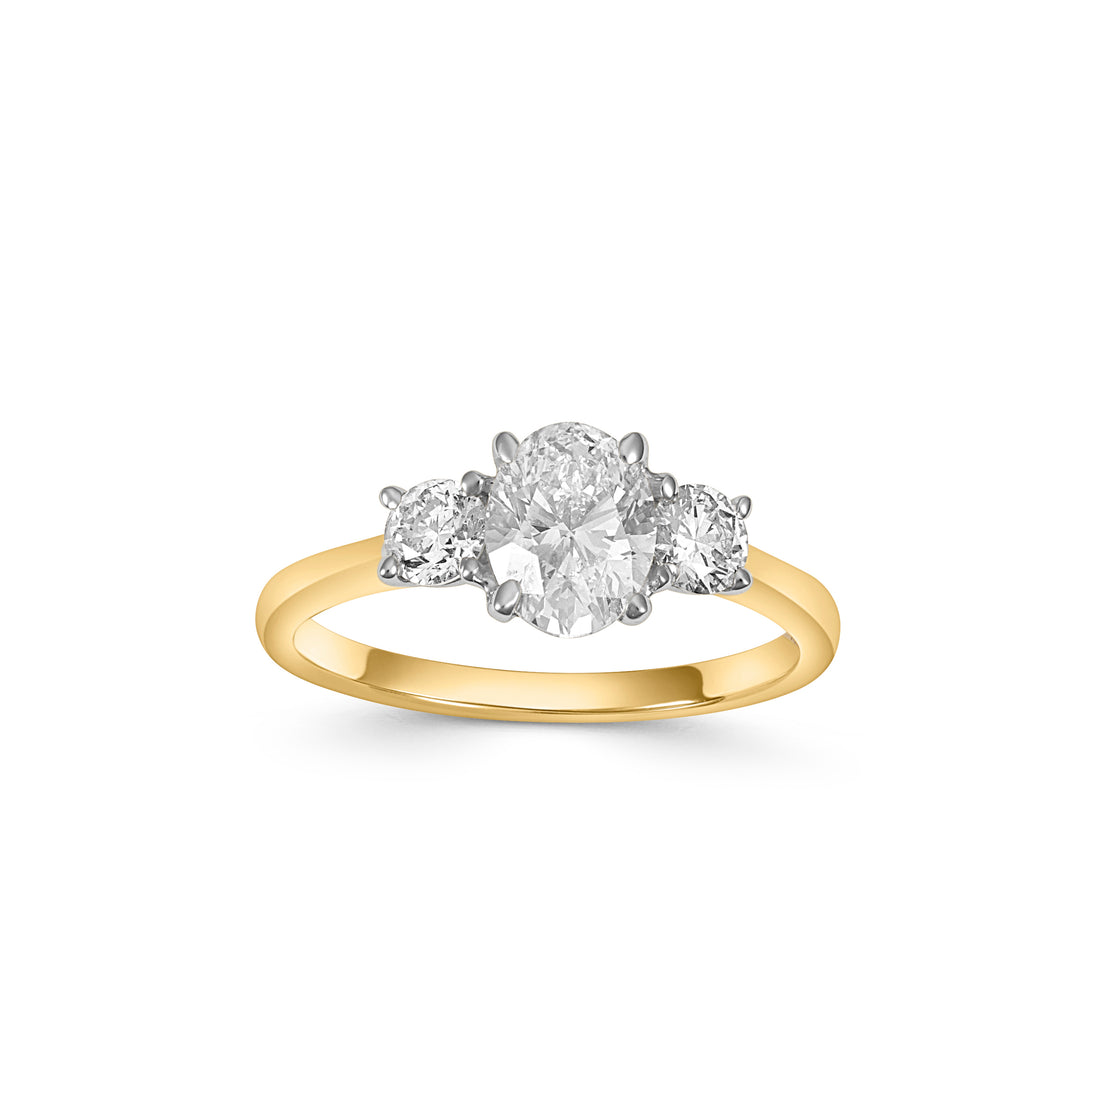 18ct Gold Three Stone Diamond Ring - Robert Anthony Jewellers, Edinburgh